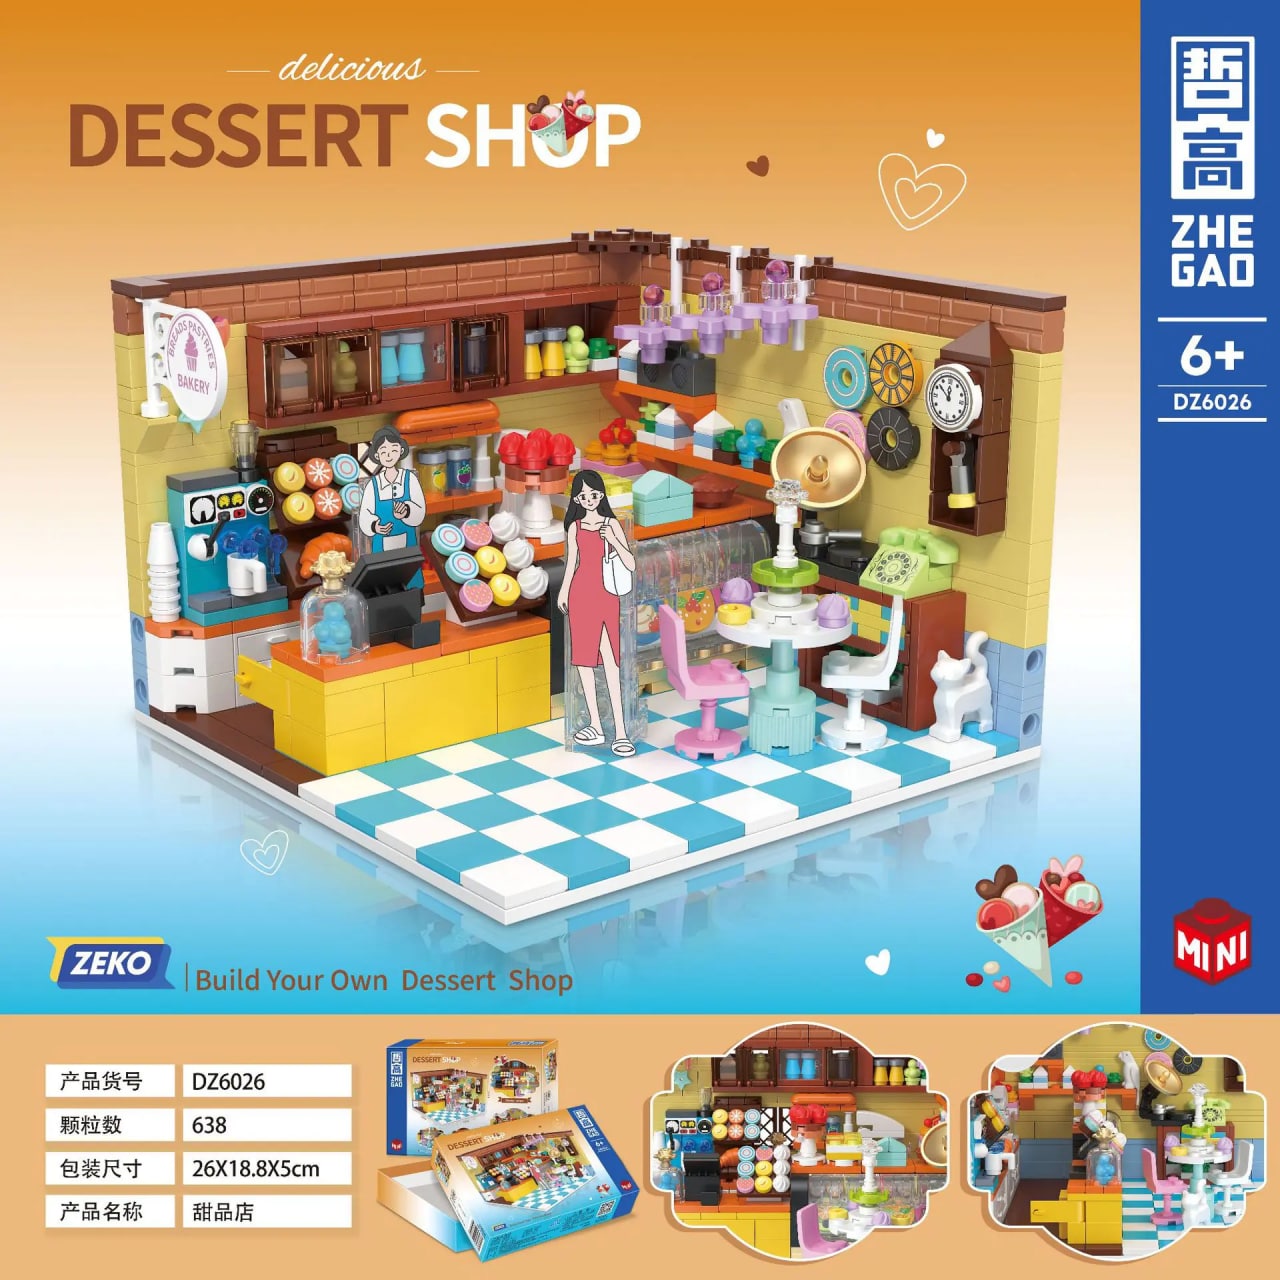 Dessert Shop ZHEGAO DZ6026 Creator With 638pcs